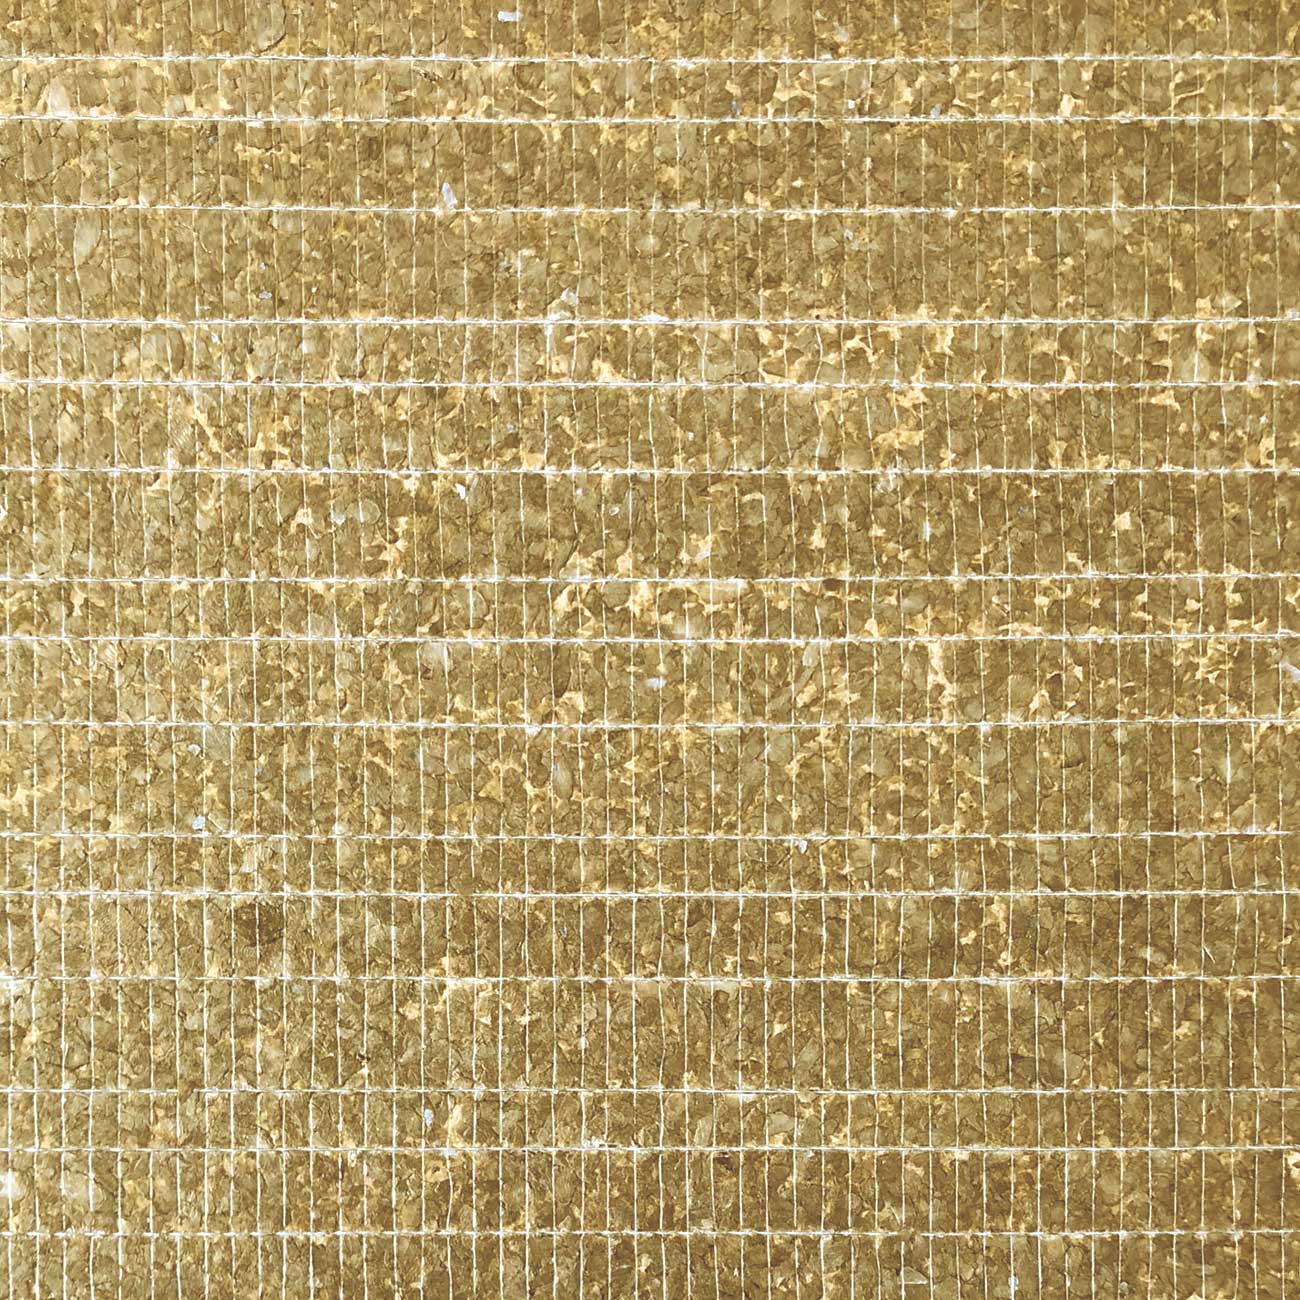 Shell wallcovering WallFace CSA07 CAPIZ handmade non-woven wallpaper with real Capiz shells pearlescent golden-brown look 2.45 m2